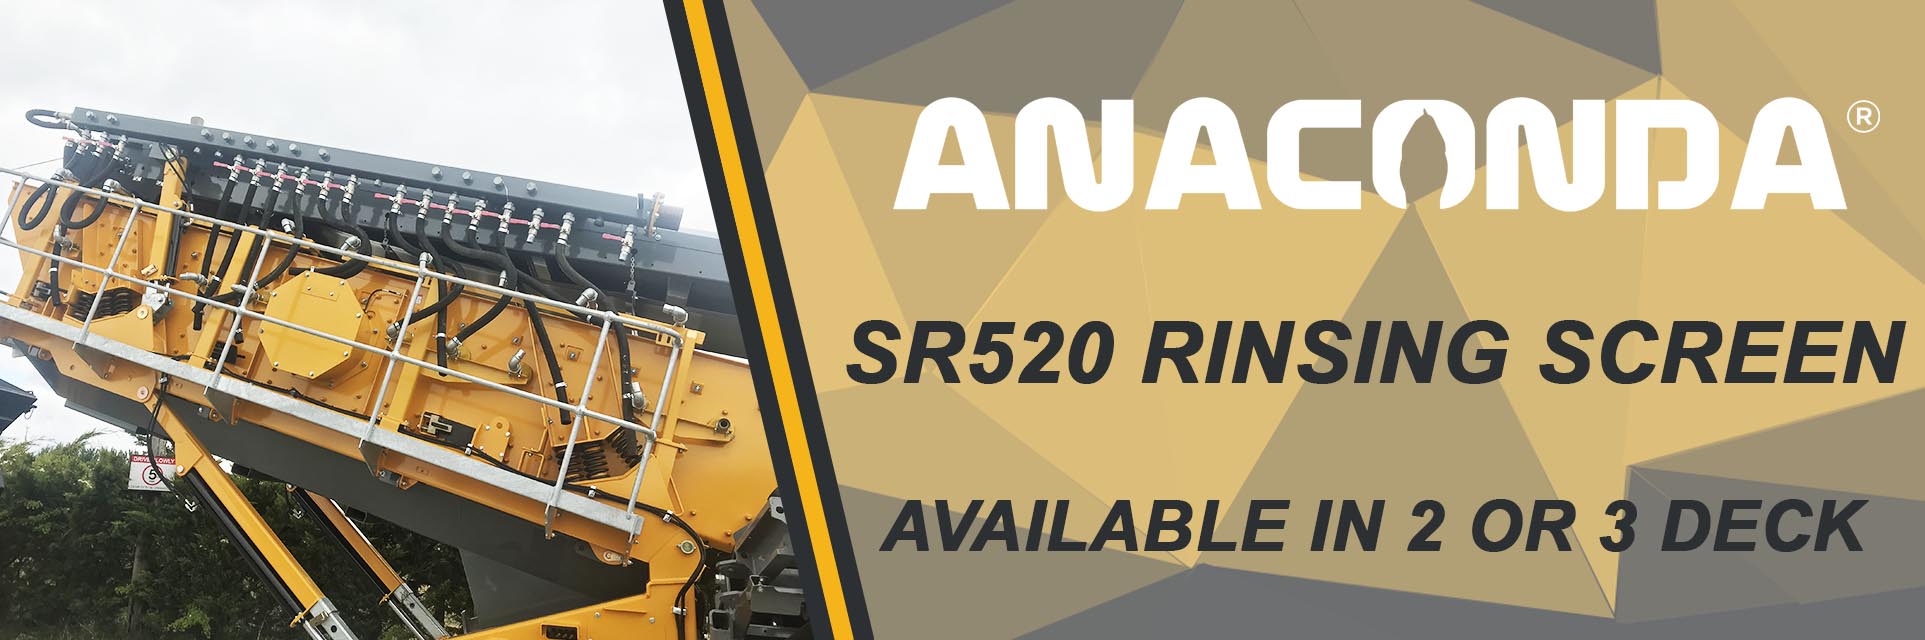 Anaconda SR520 Rinsing Screen Banner